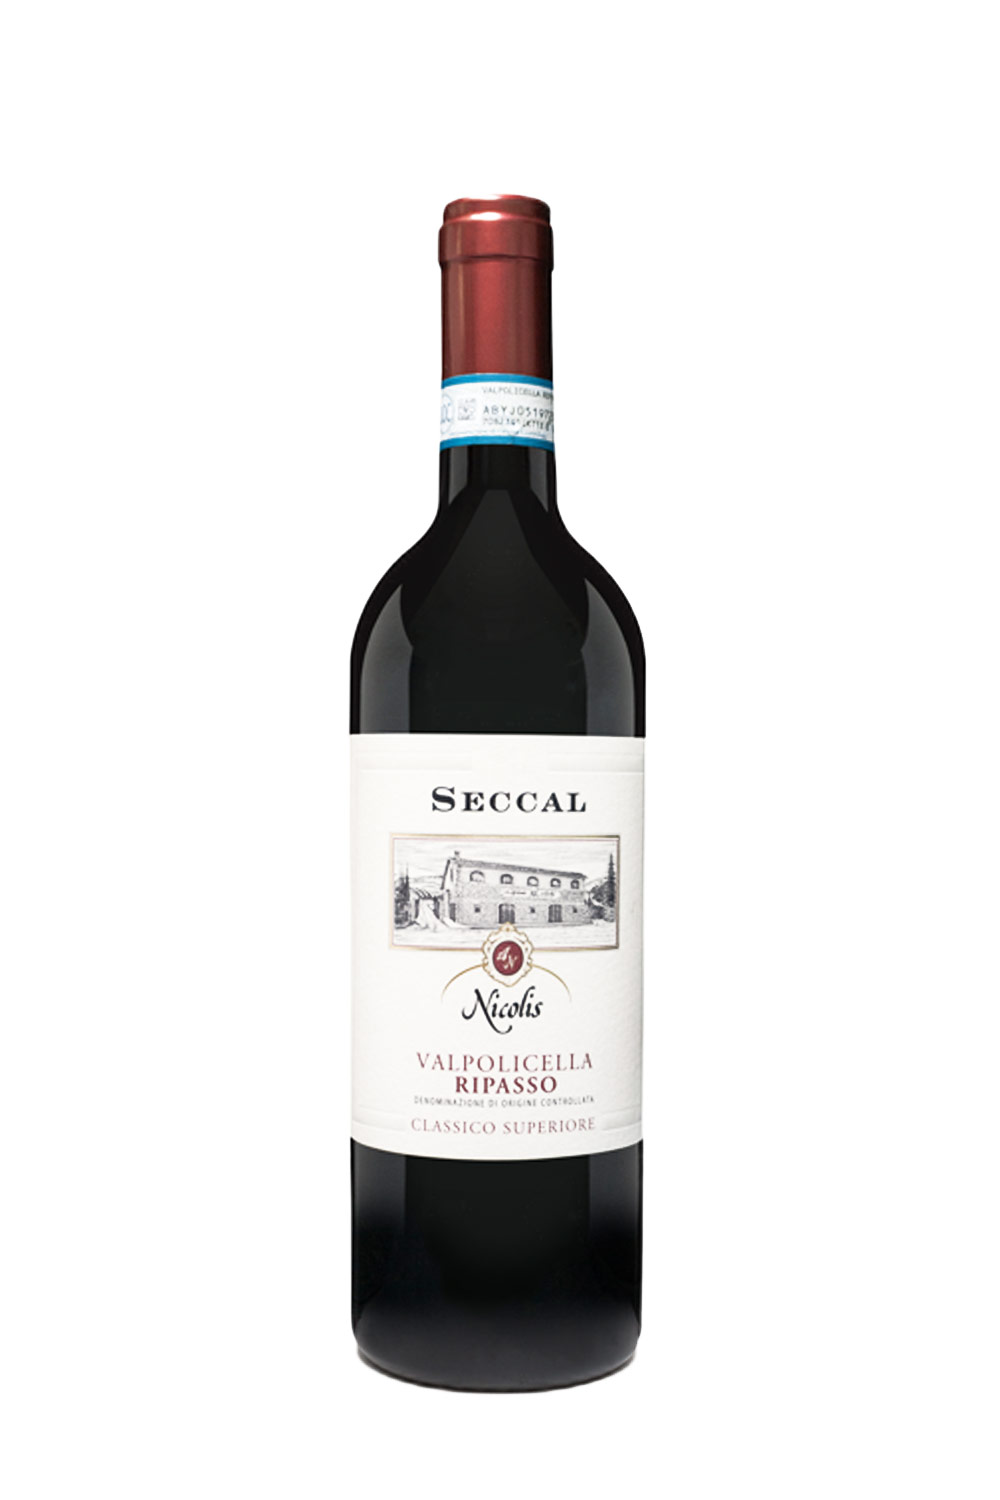 Classico Nicolis Online 2019 - aus bei Ripasso Weine Senti | Italien Vini kaufen DOC Seccal Valpolicella